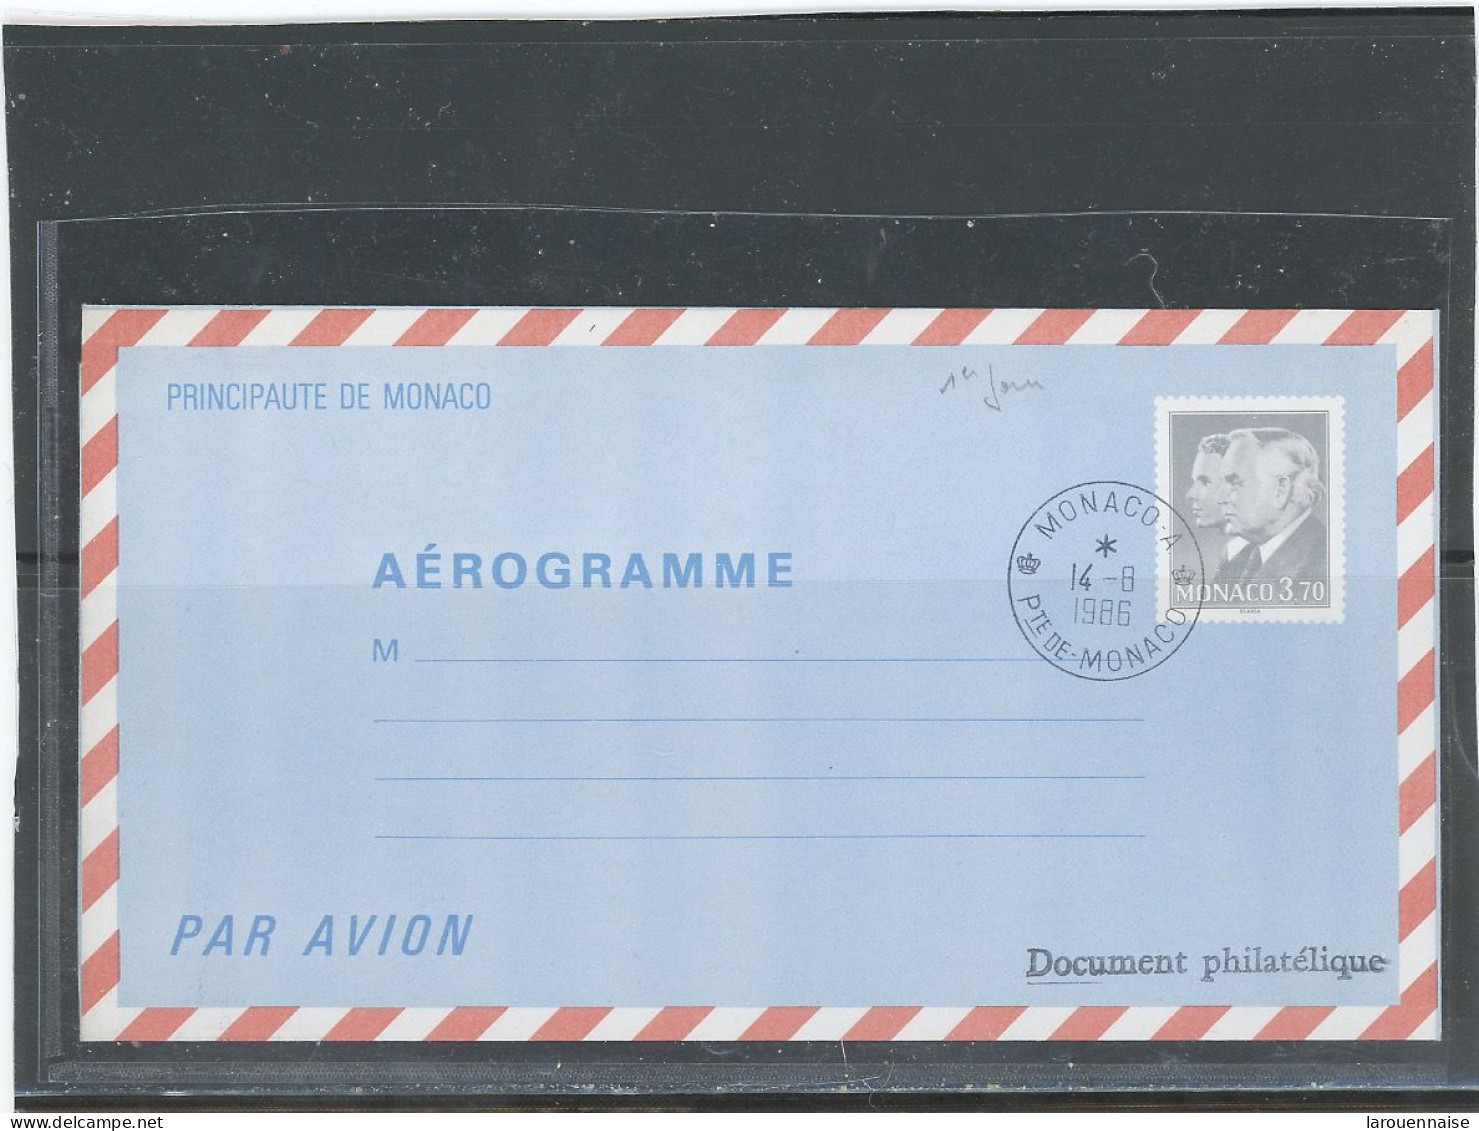 MONACO-AEROGRAMME  - N°507 - 3,70 F -RAINIER -ALBERT -Obl 1er JOUR 14-8--86 - Postal Stationery